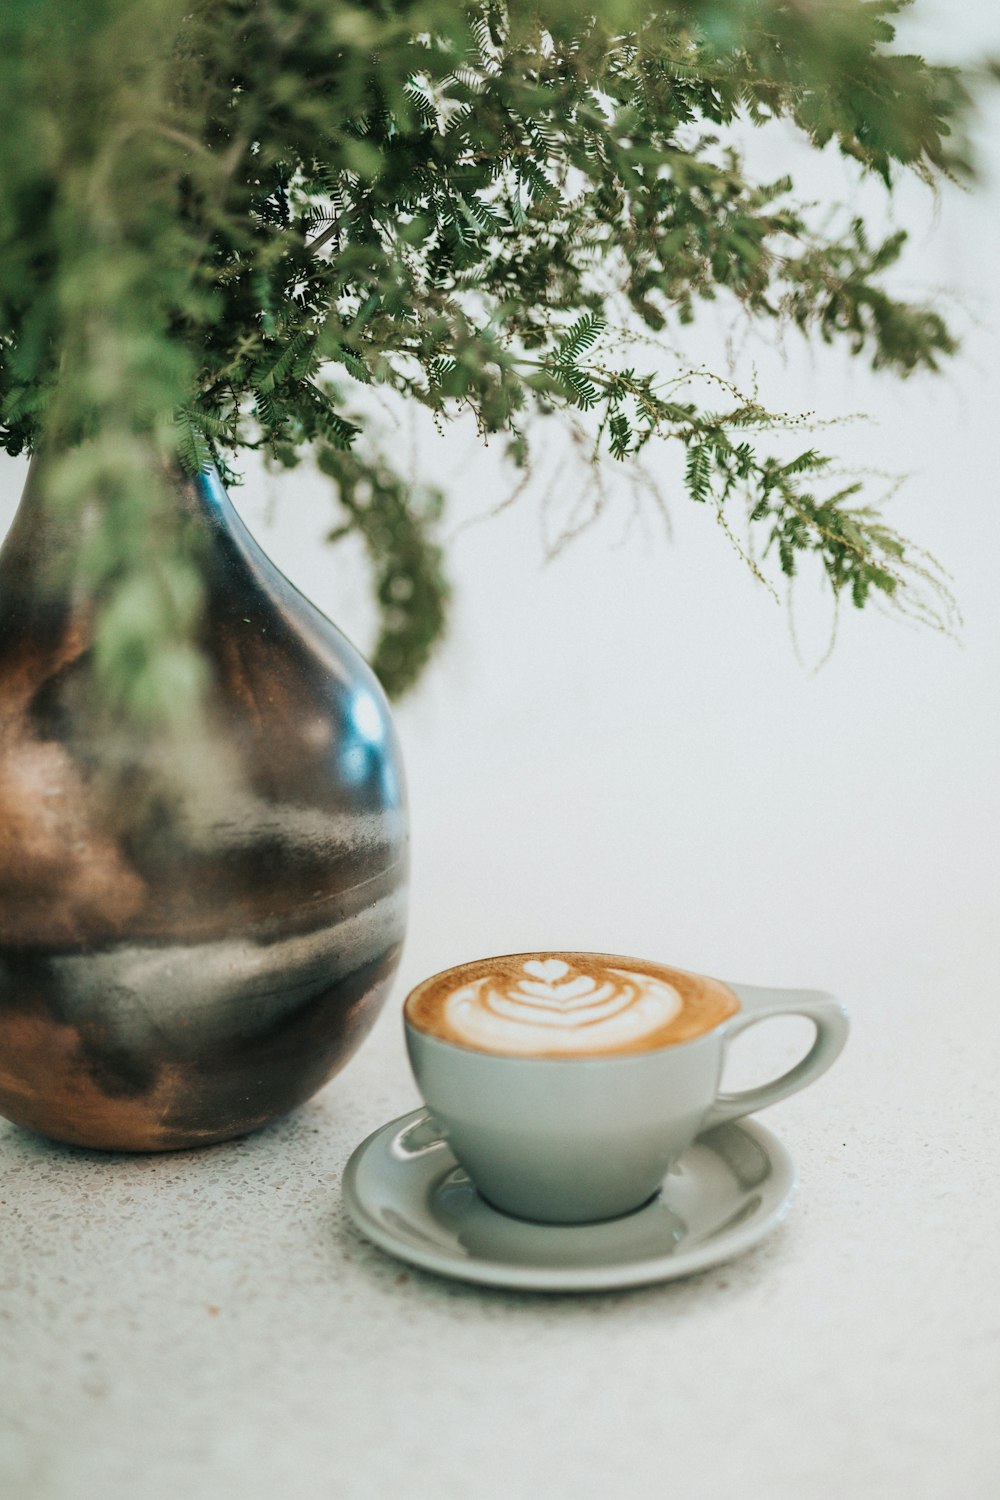 cup of coffee latte near plants in vase